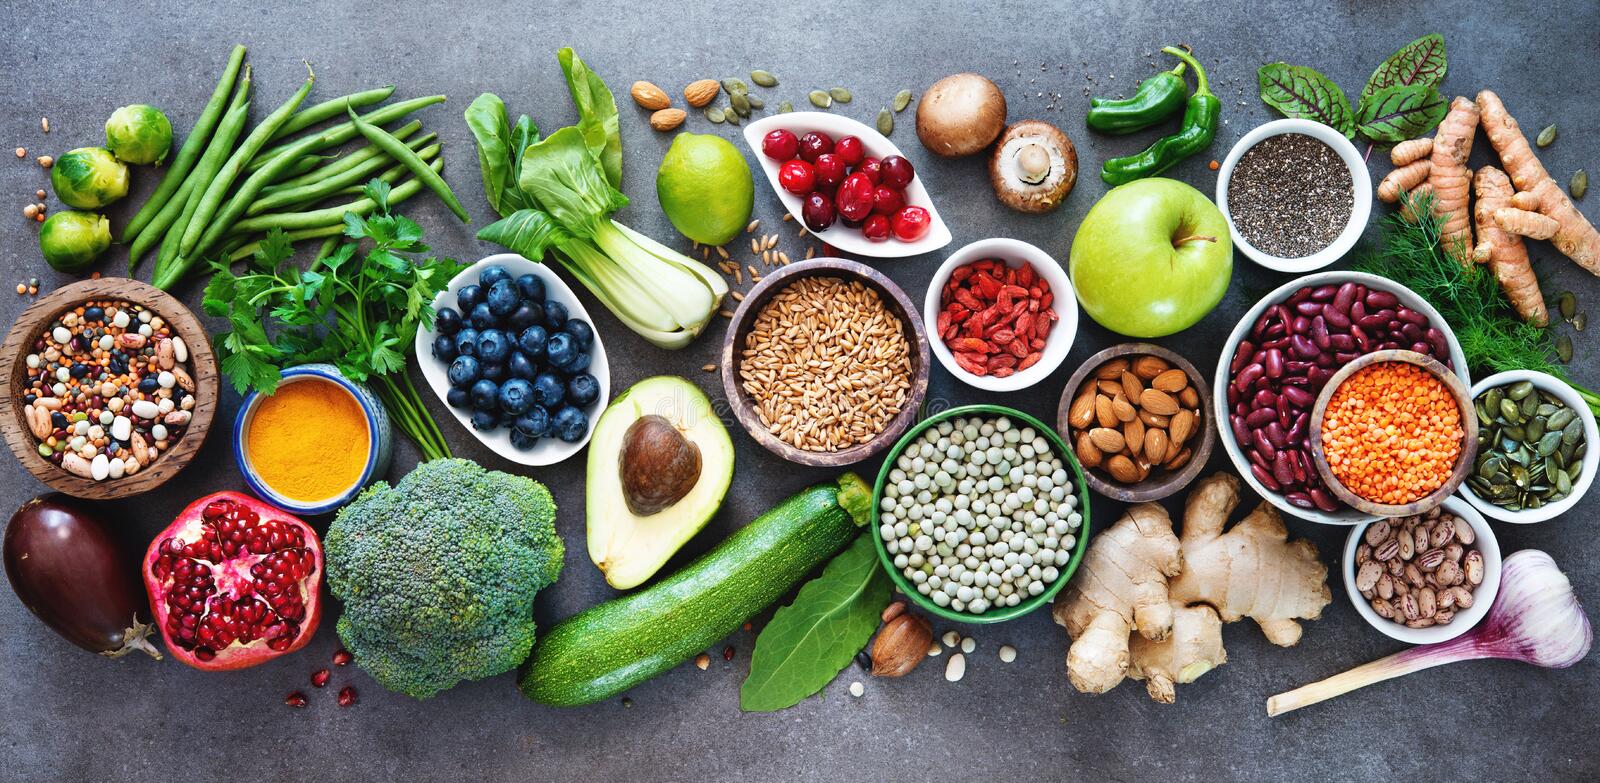 healthy-food-selection-healthy-food-selection-fruits-vegetab